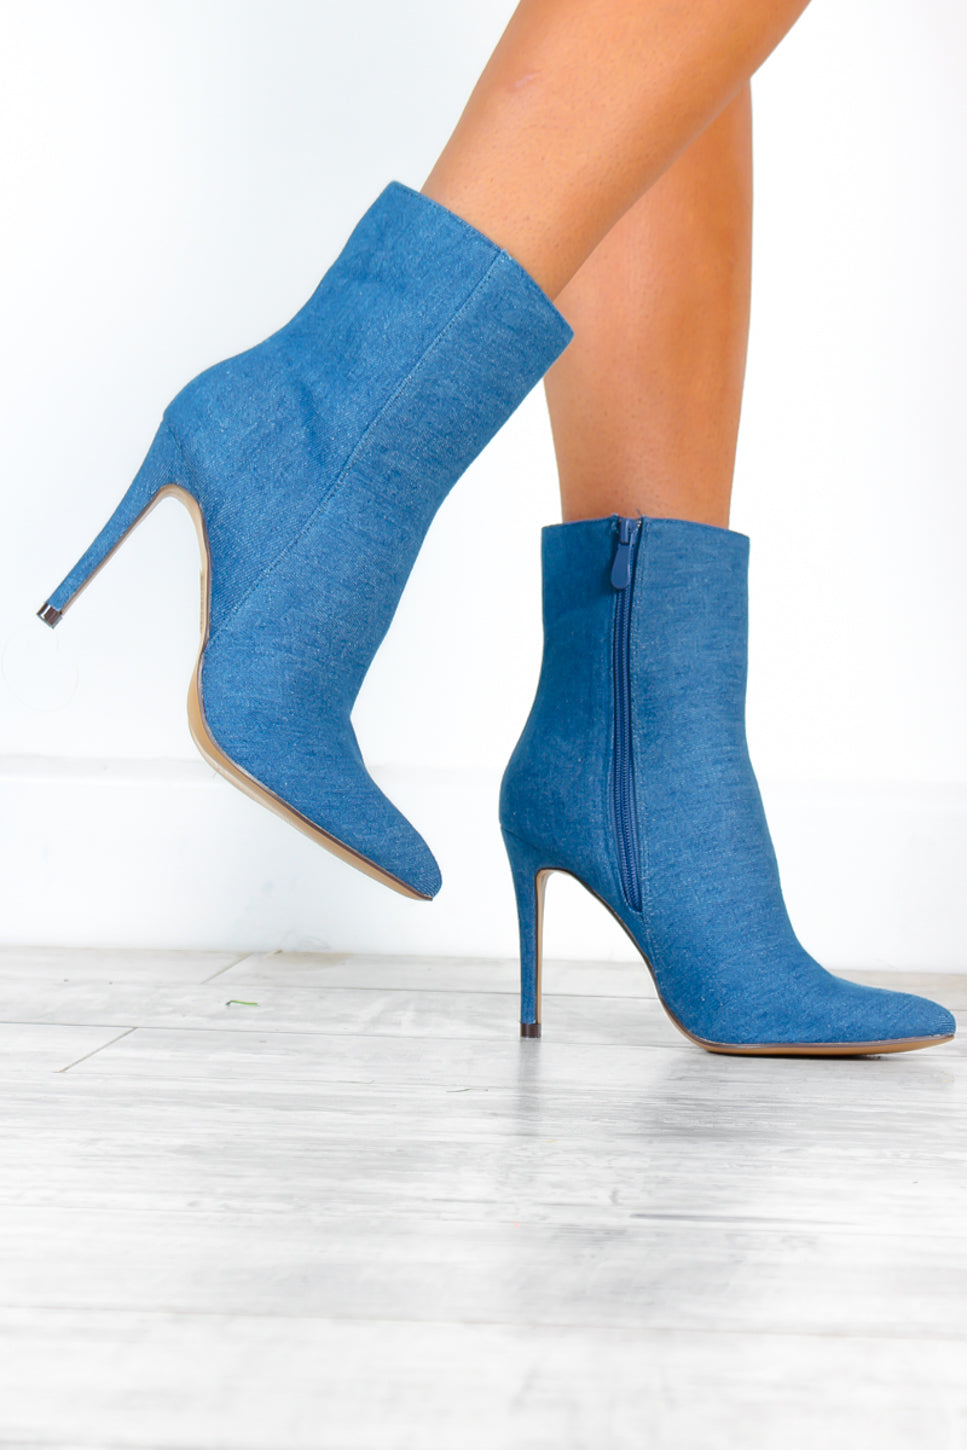 Buy Rocia Black Women Ankle Length Boots Online at Regal Shoes |8197108